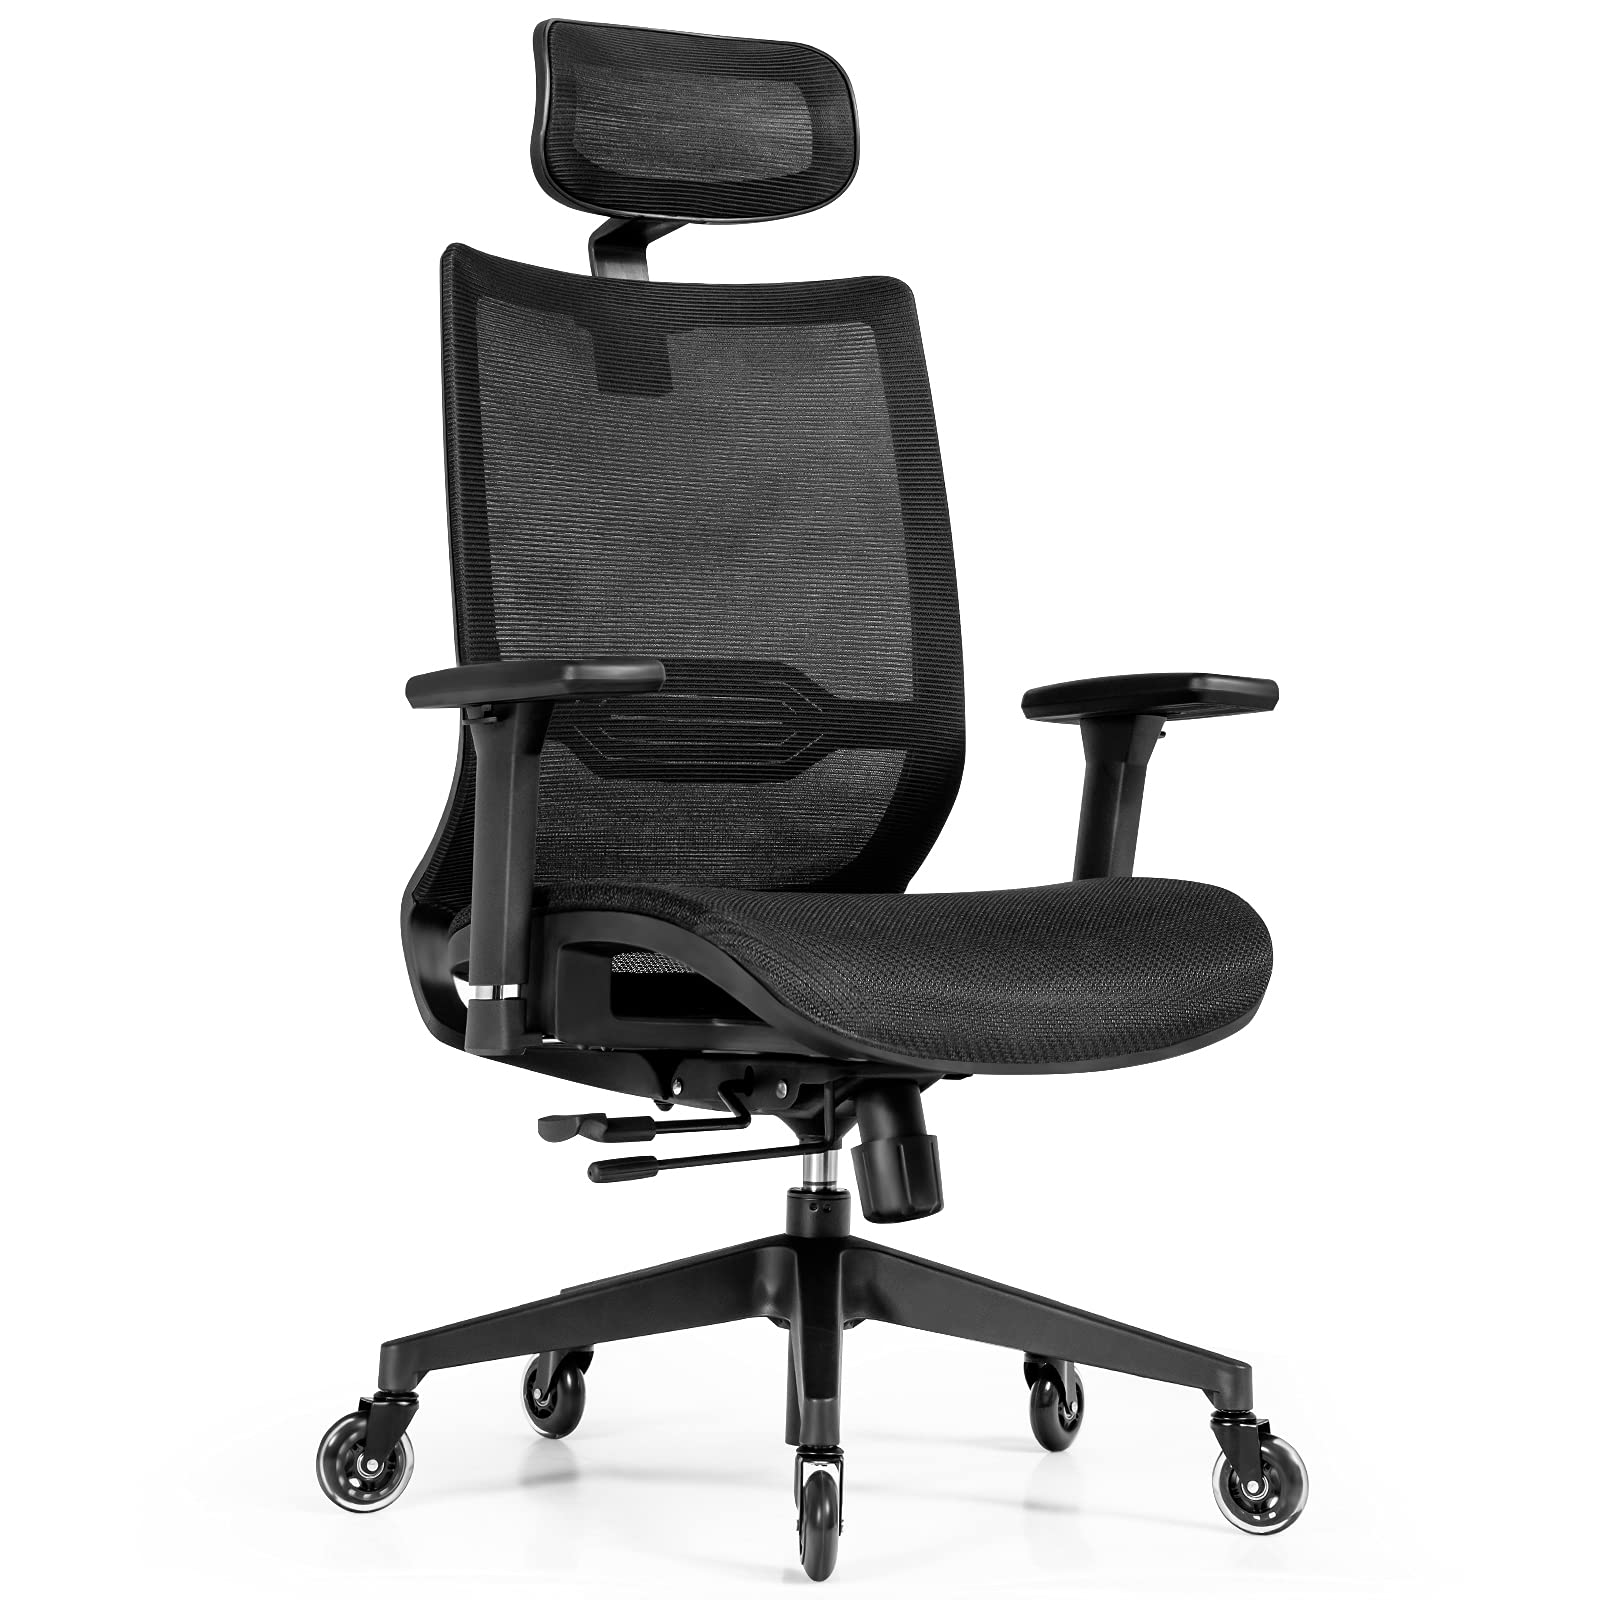 Giantex High Back Computer Desk Chair (Black)